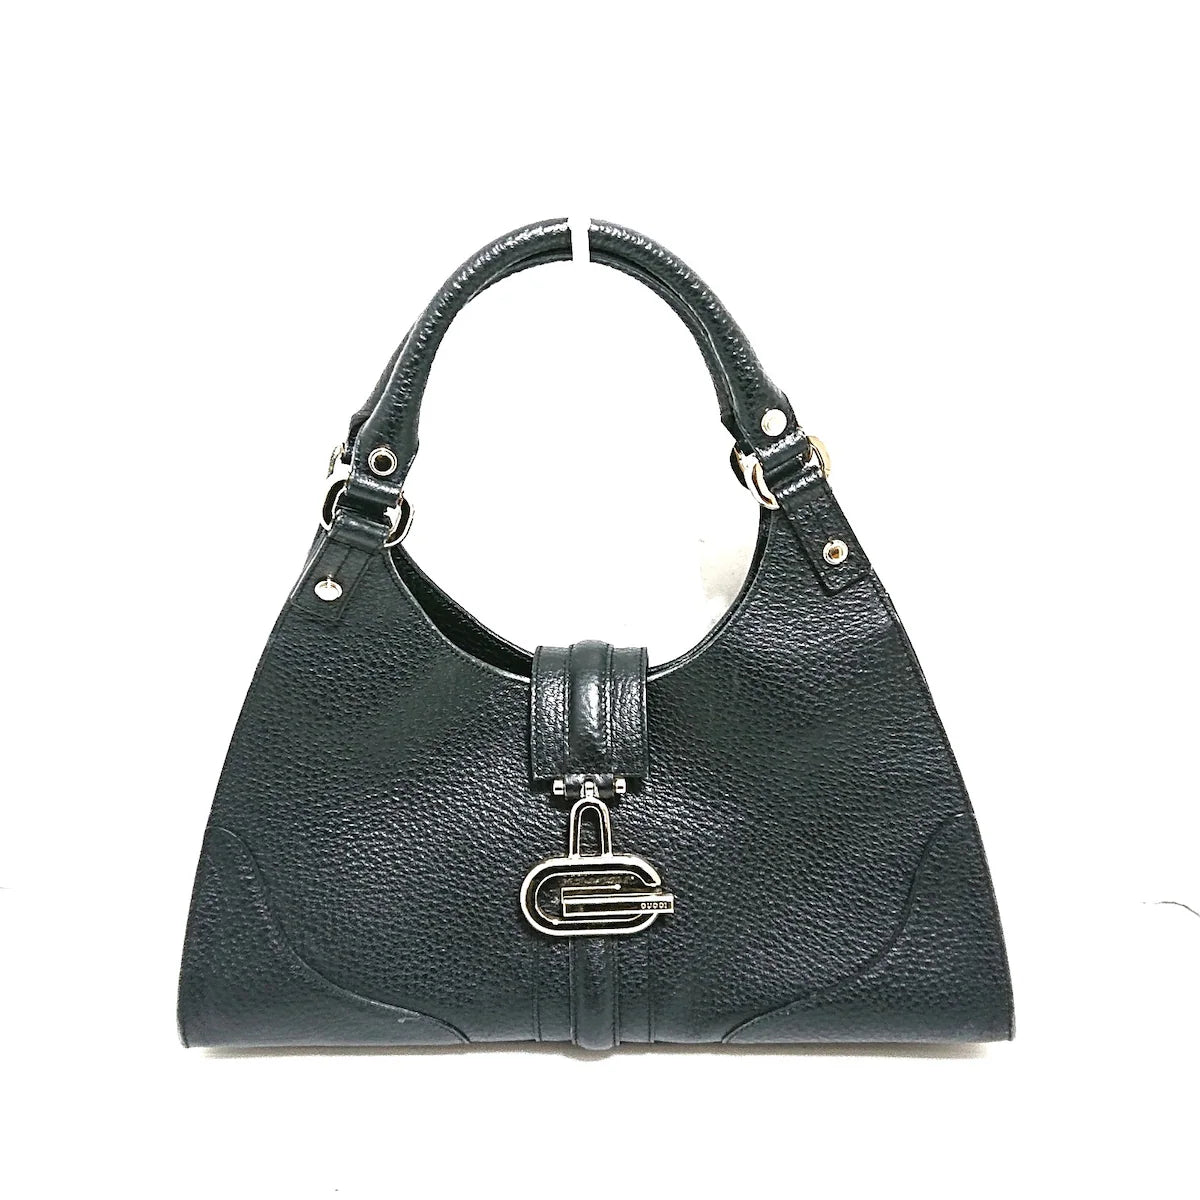 GUCCI - Black Leather Vintage Handbag